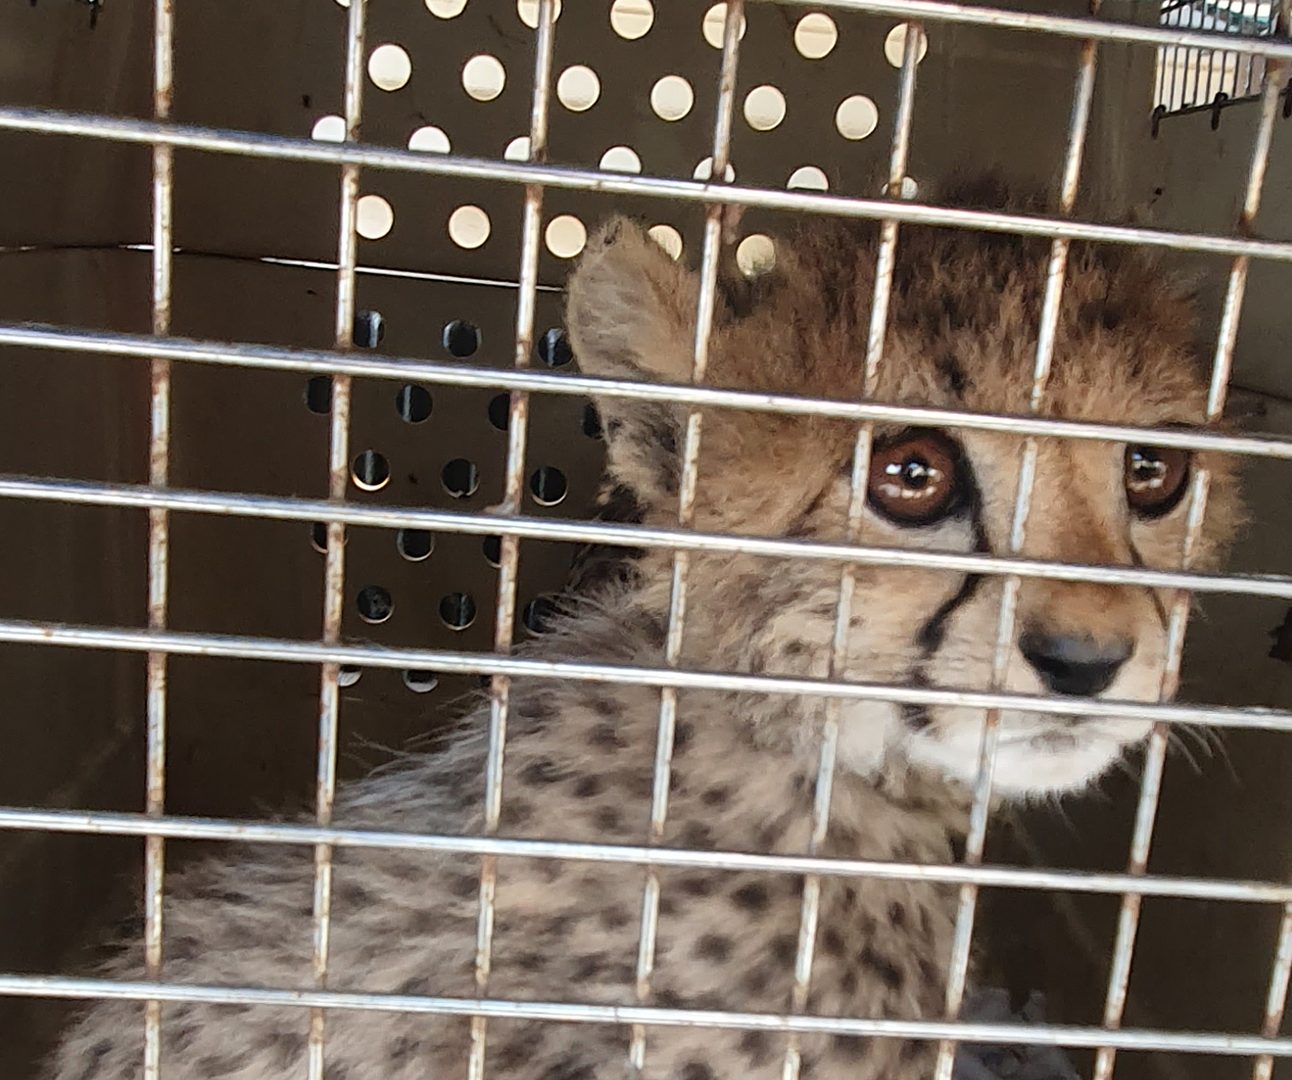 A cheetah cub looks through the bars of an animal carrier crate